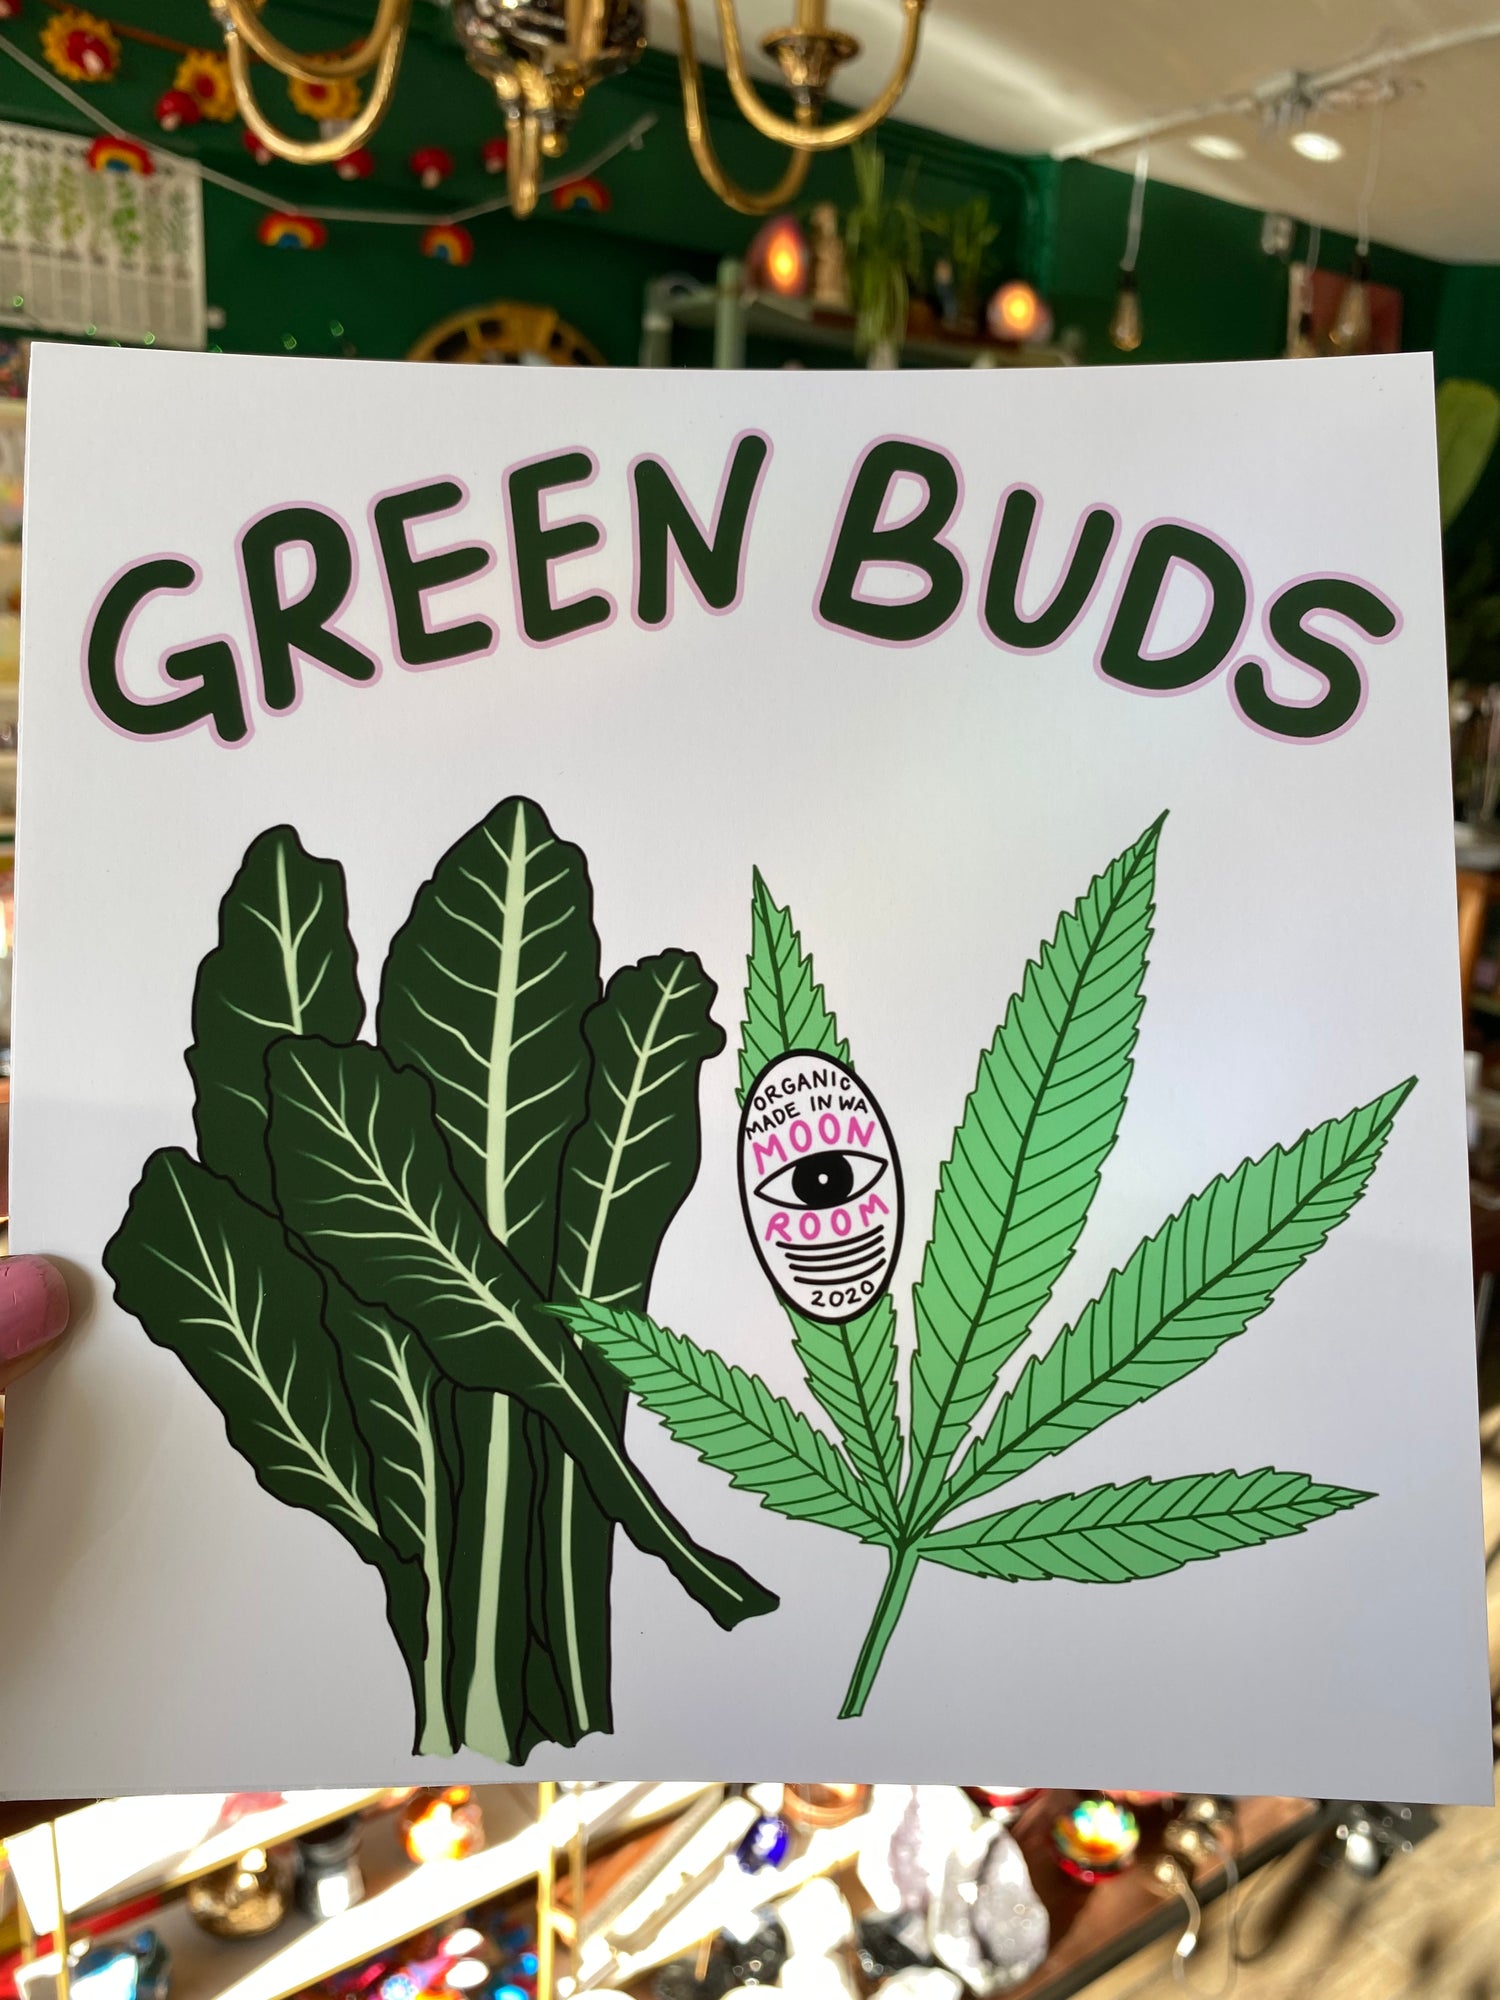 Green Buds - 8x8 Print - Moon Room Shop and Wellness